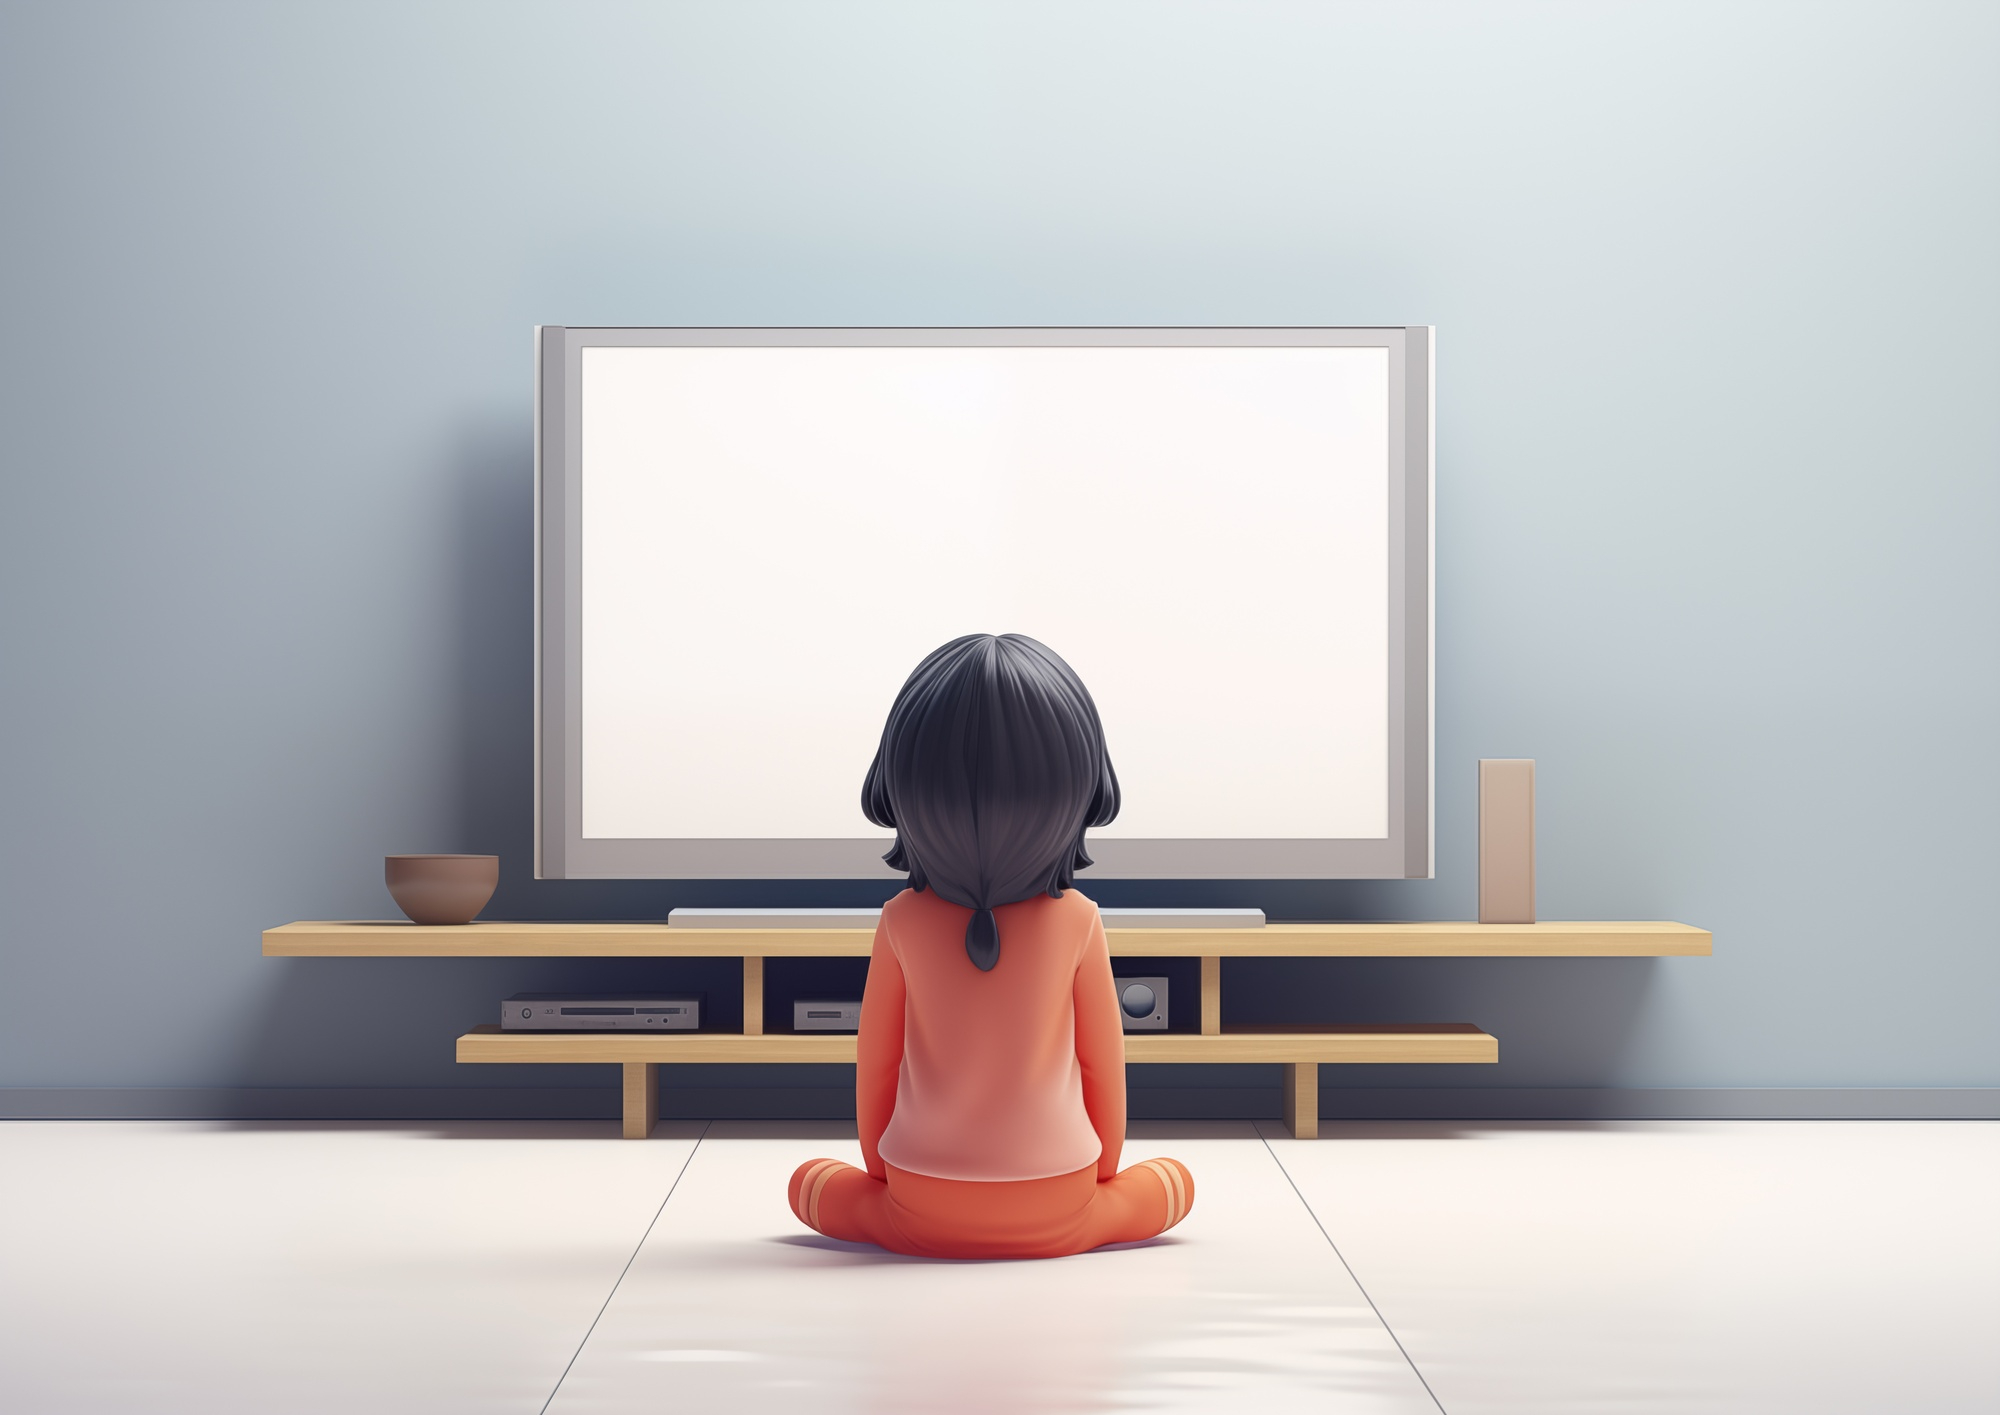 kid watching TV